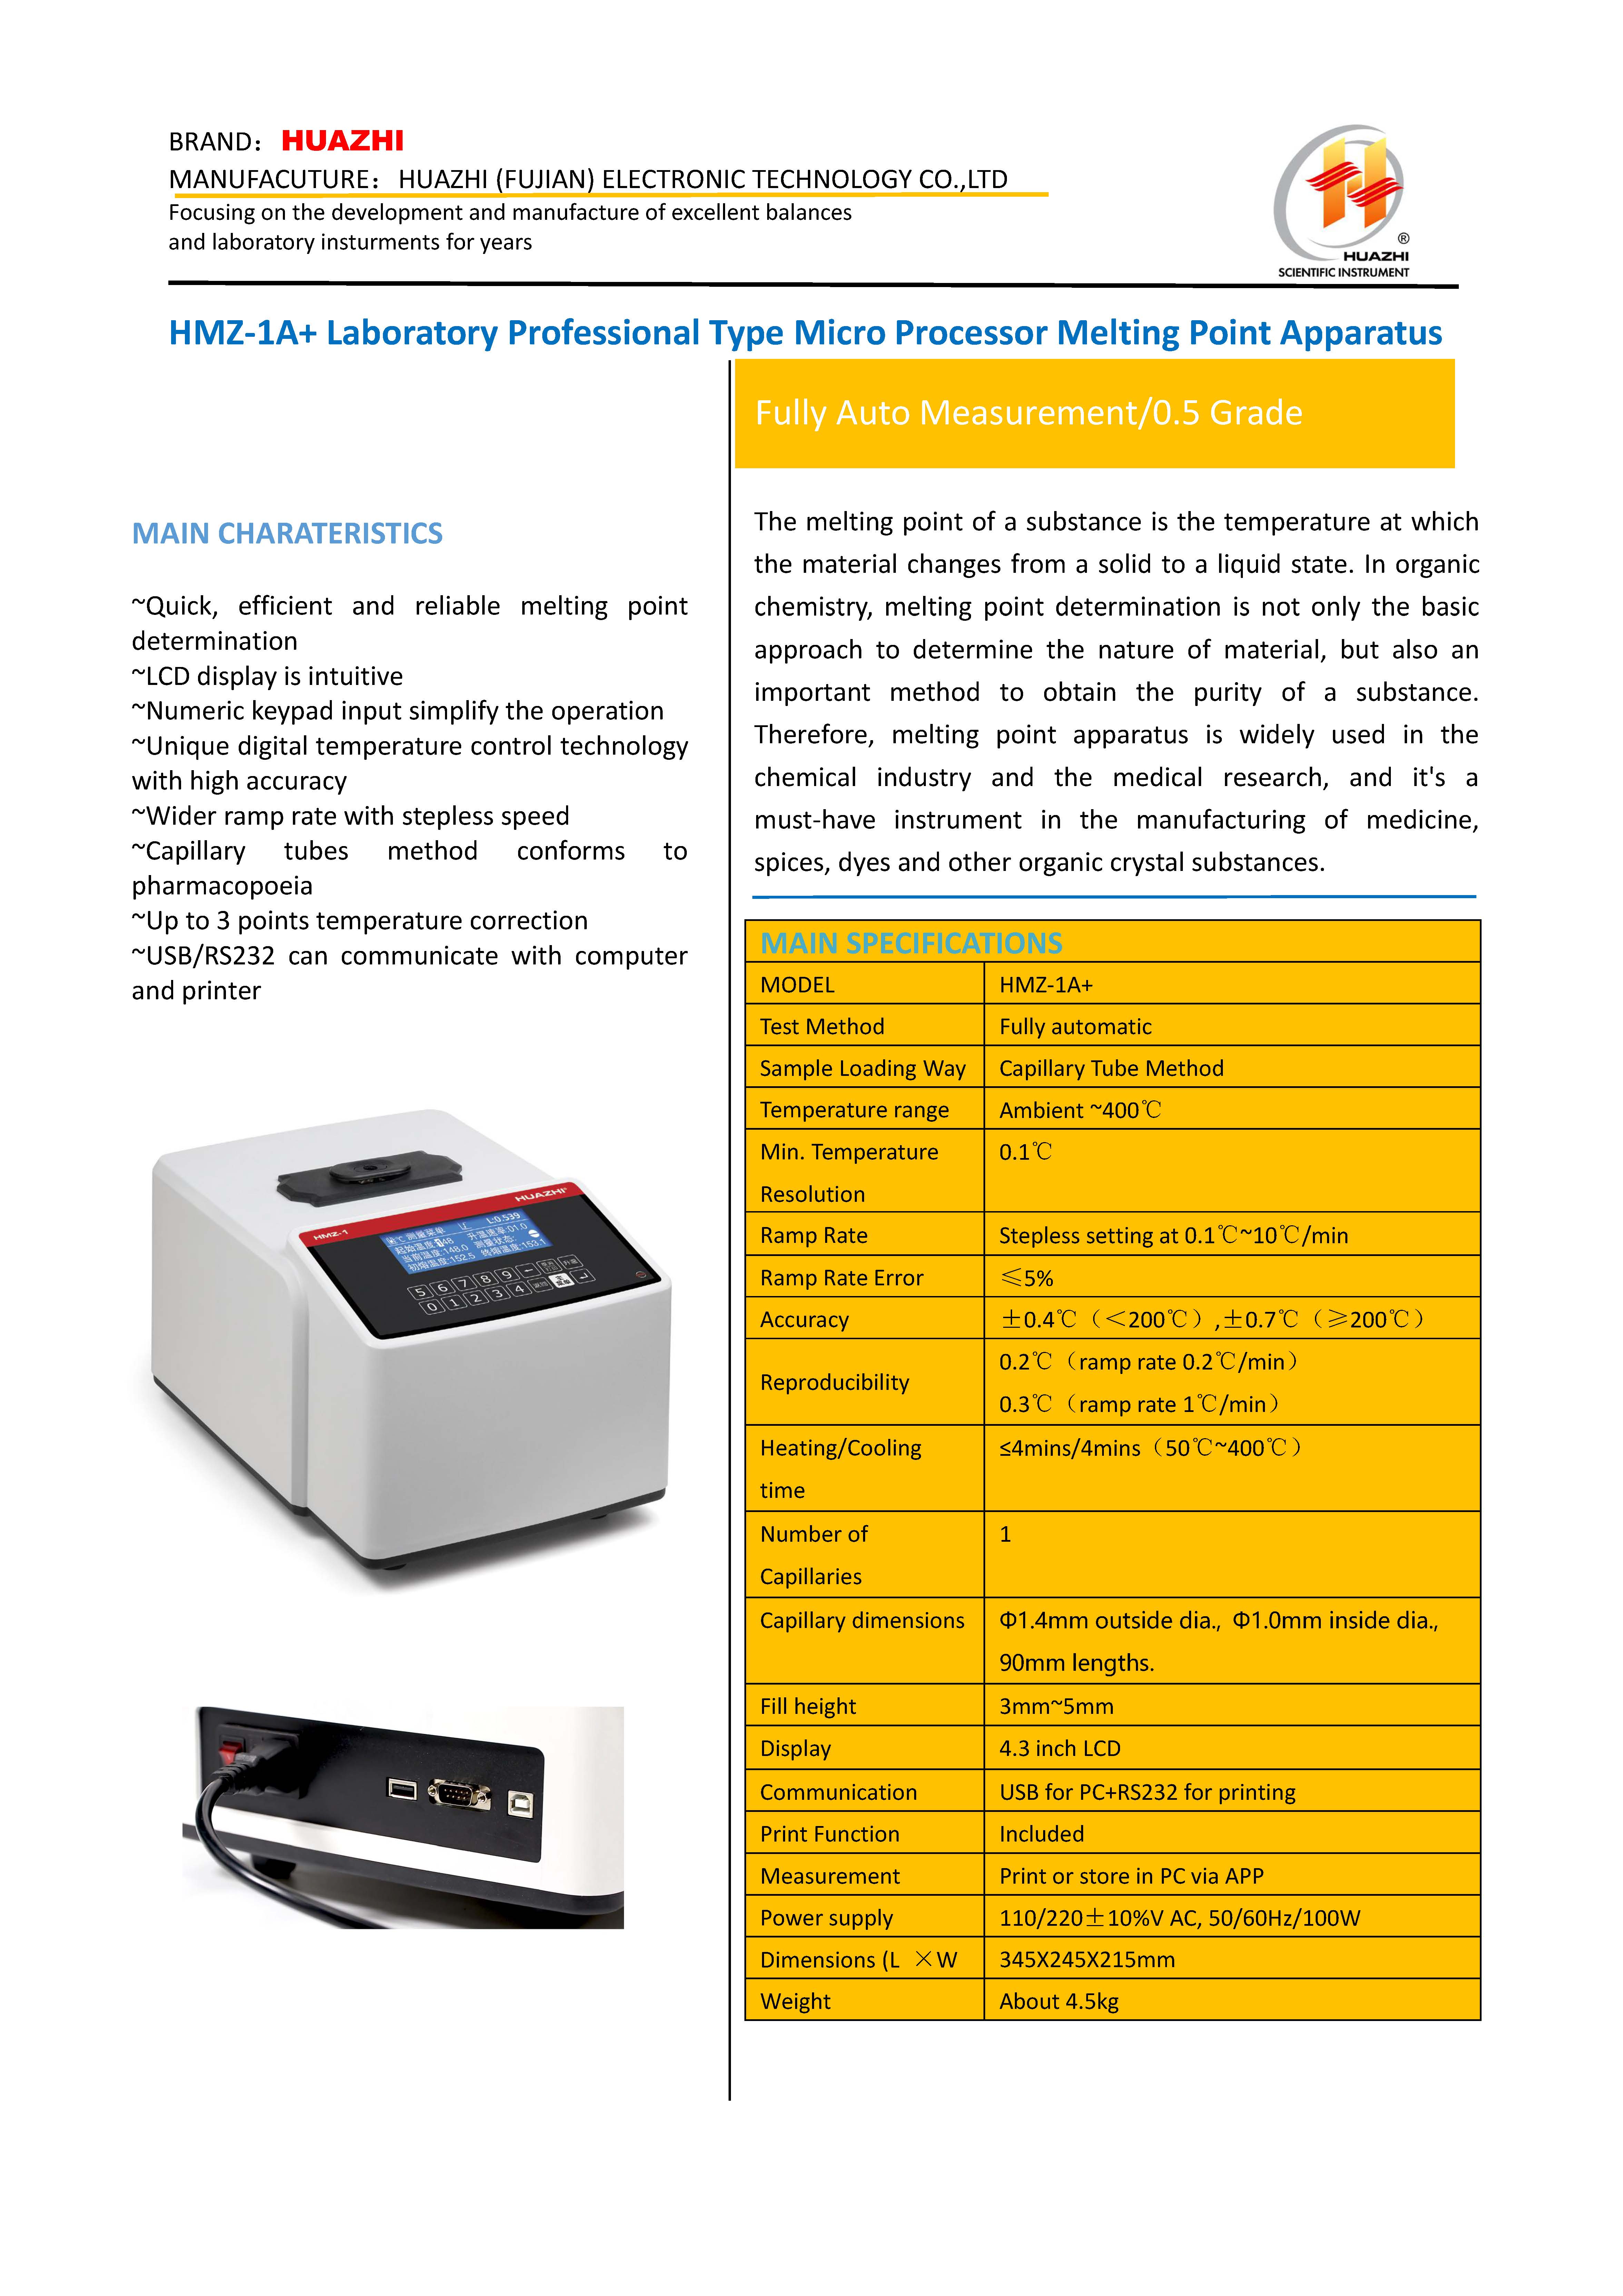 HMZ-1A+Laboratory Professional Melting Point Apparatus.jpg